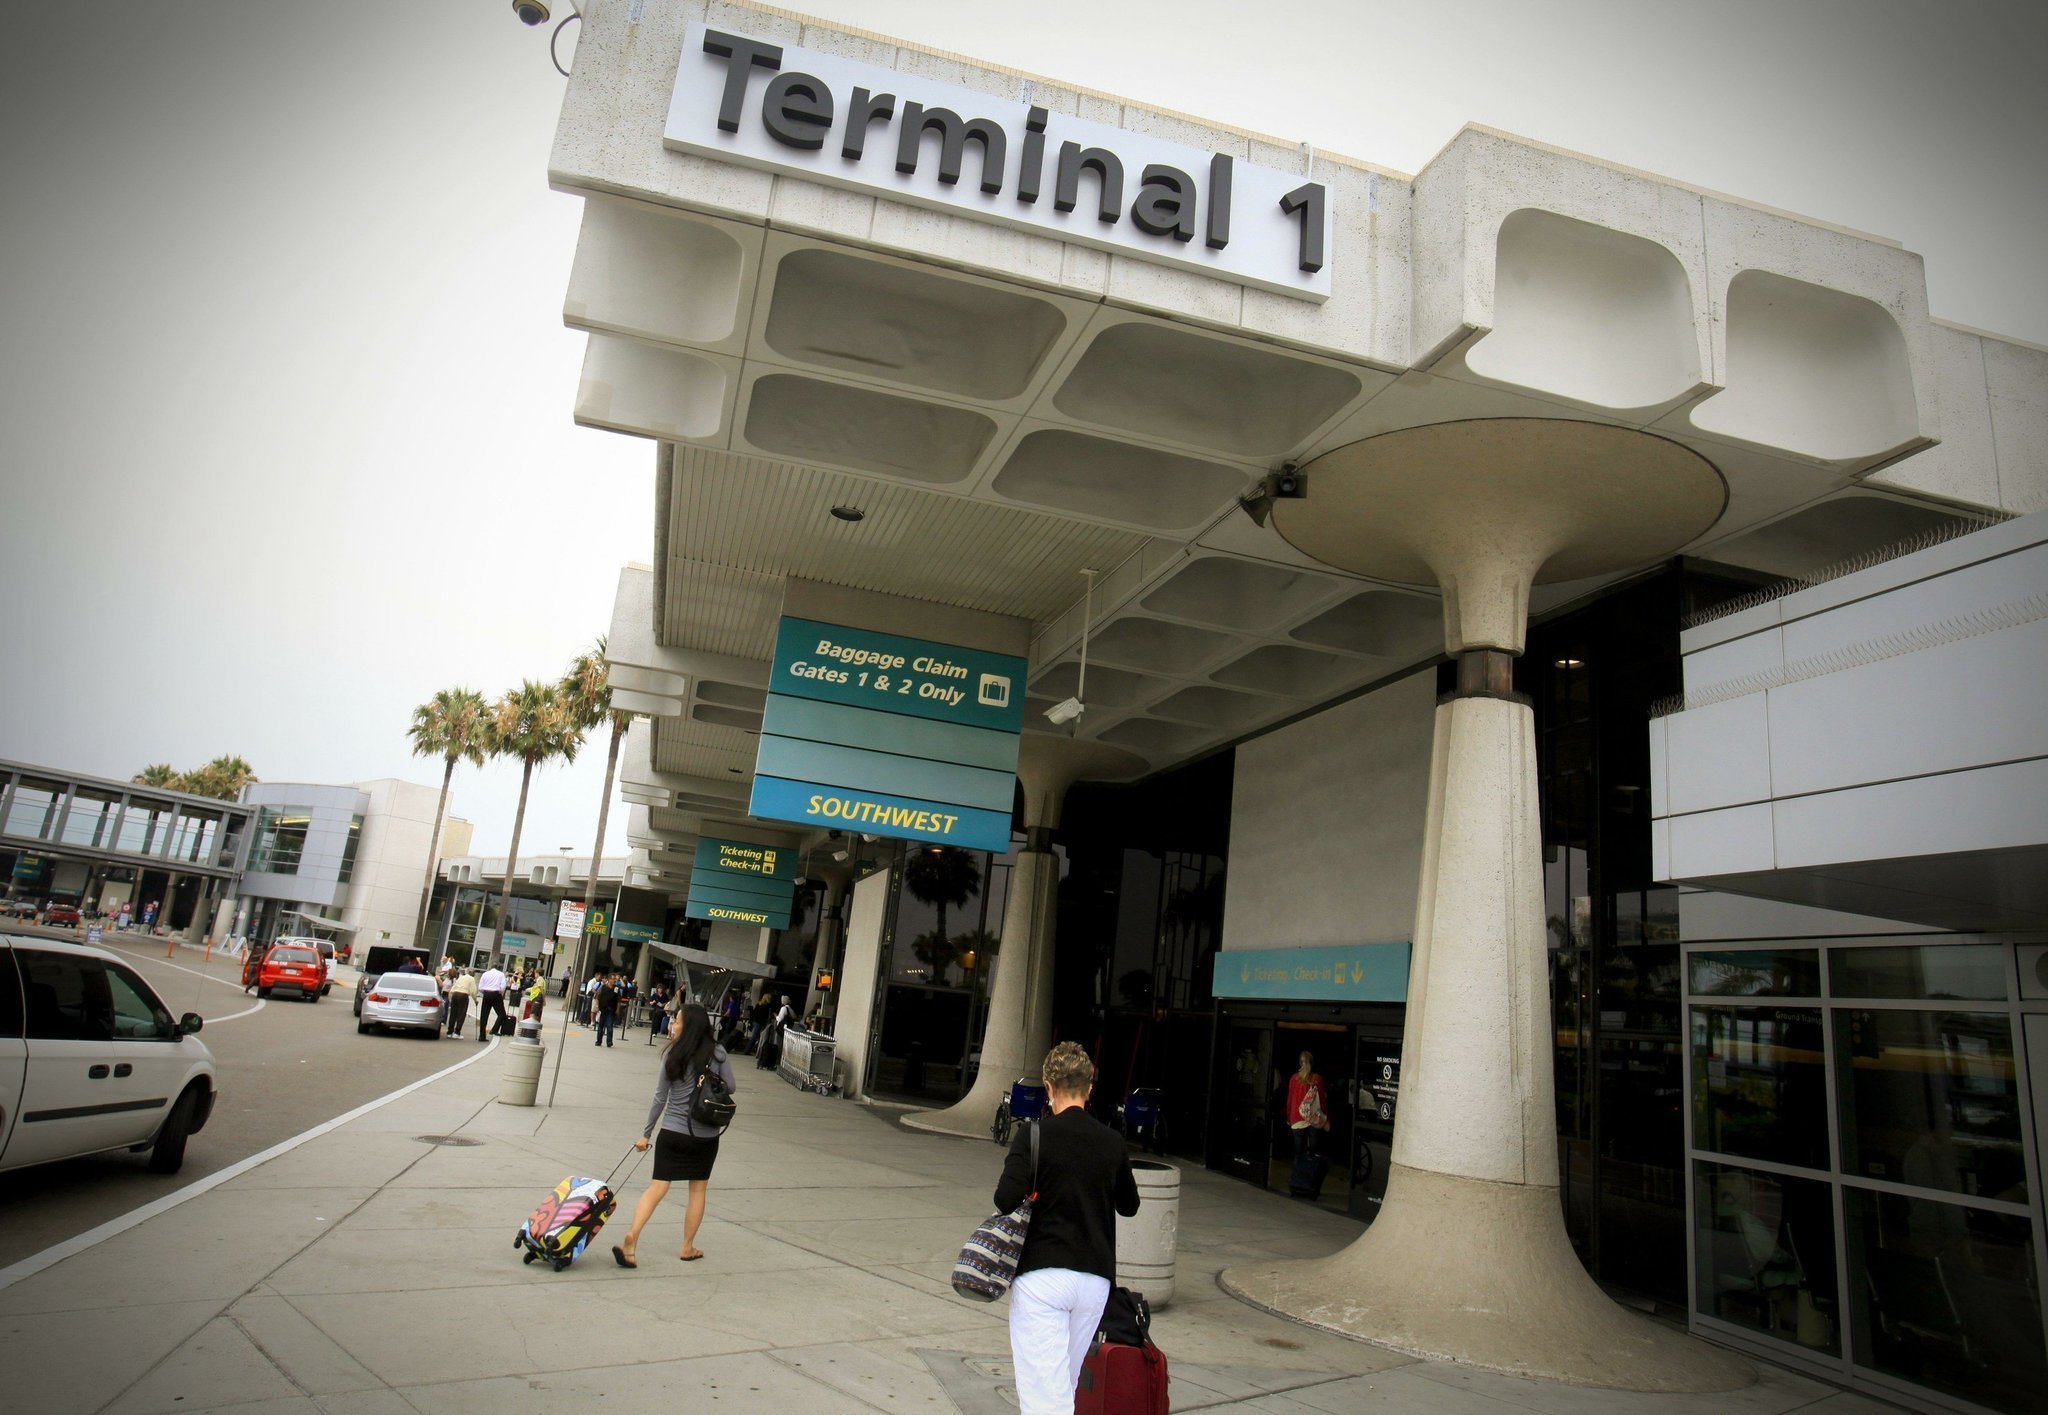 Airport advances $2.2B Terminal 1 replacement plan - The San Diego